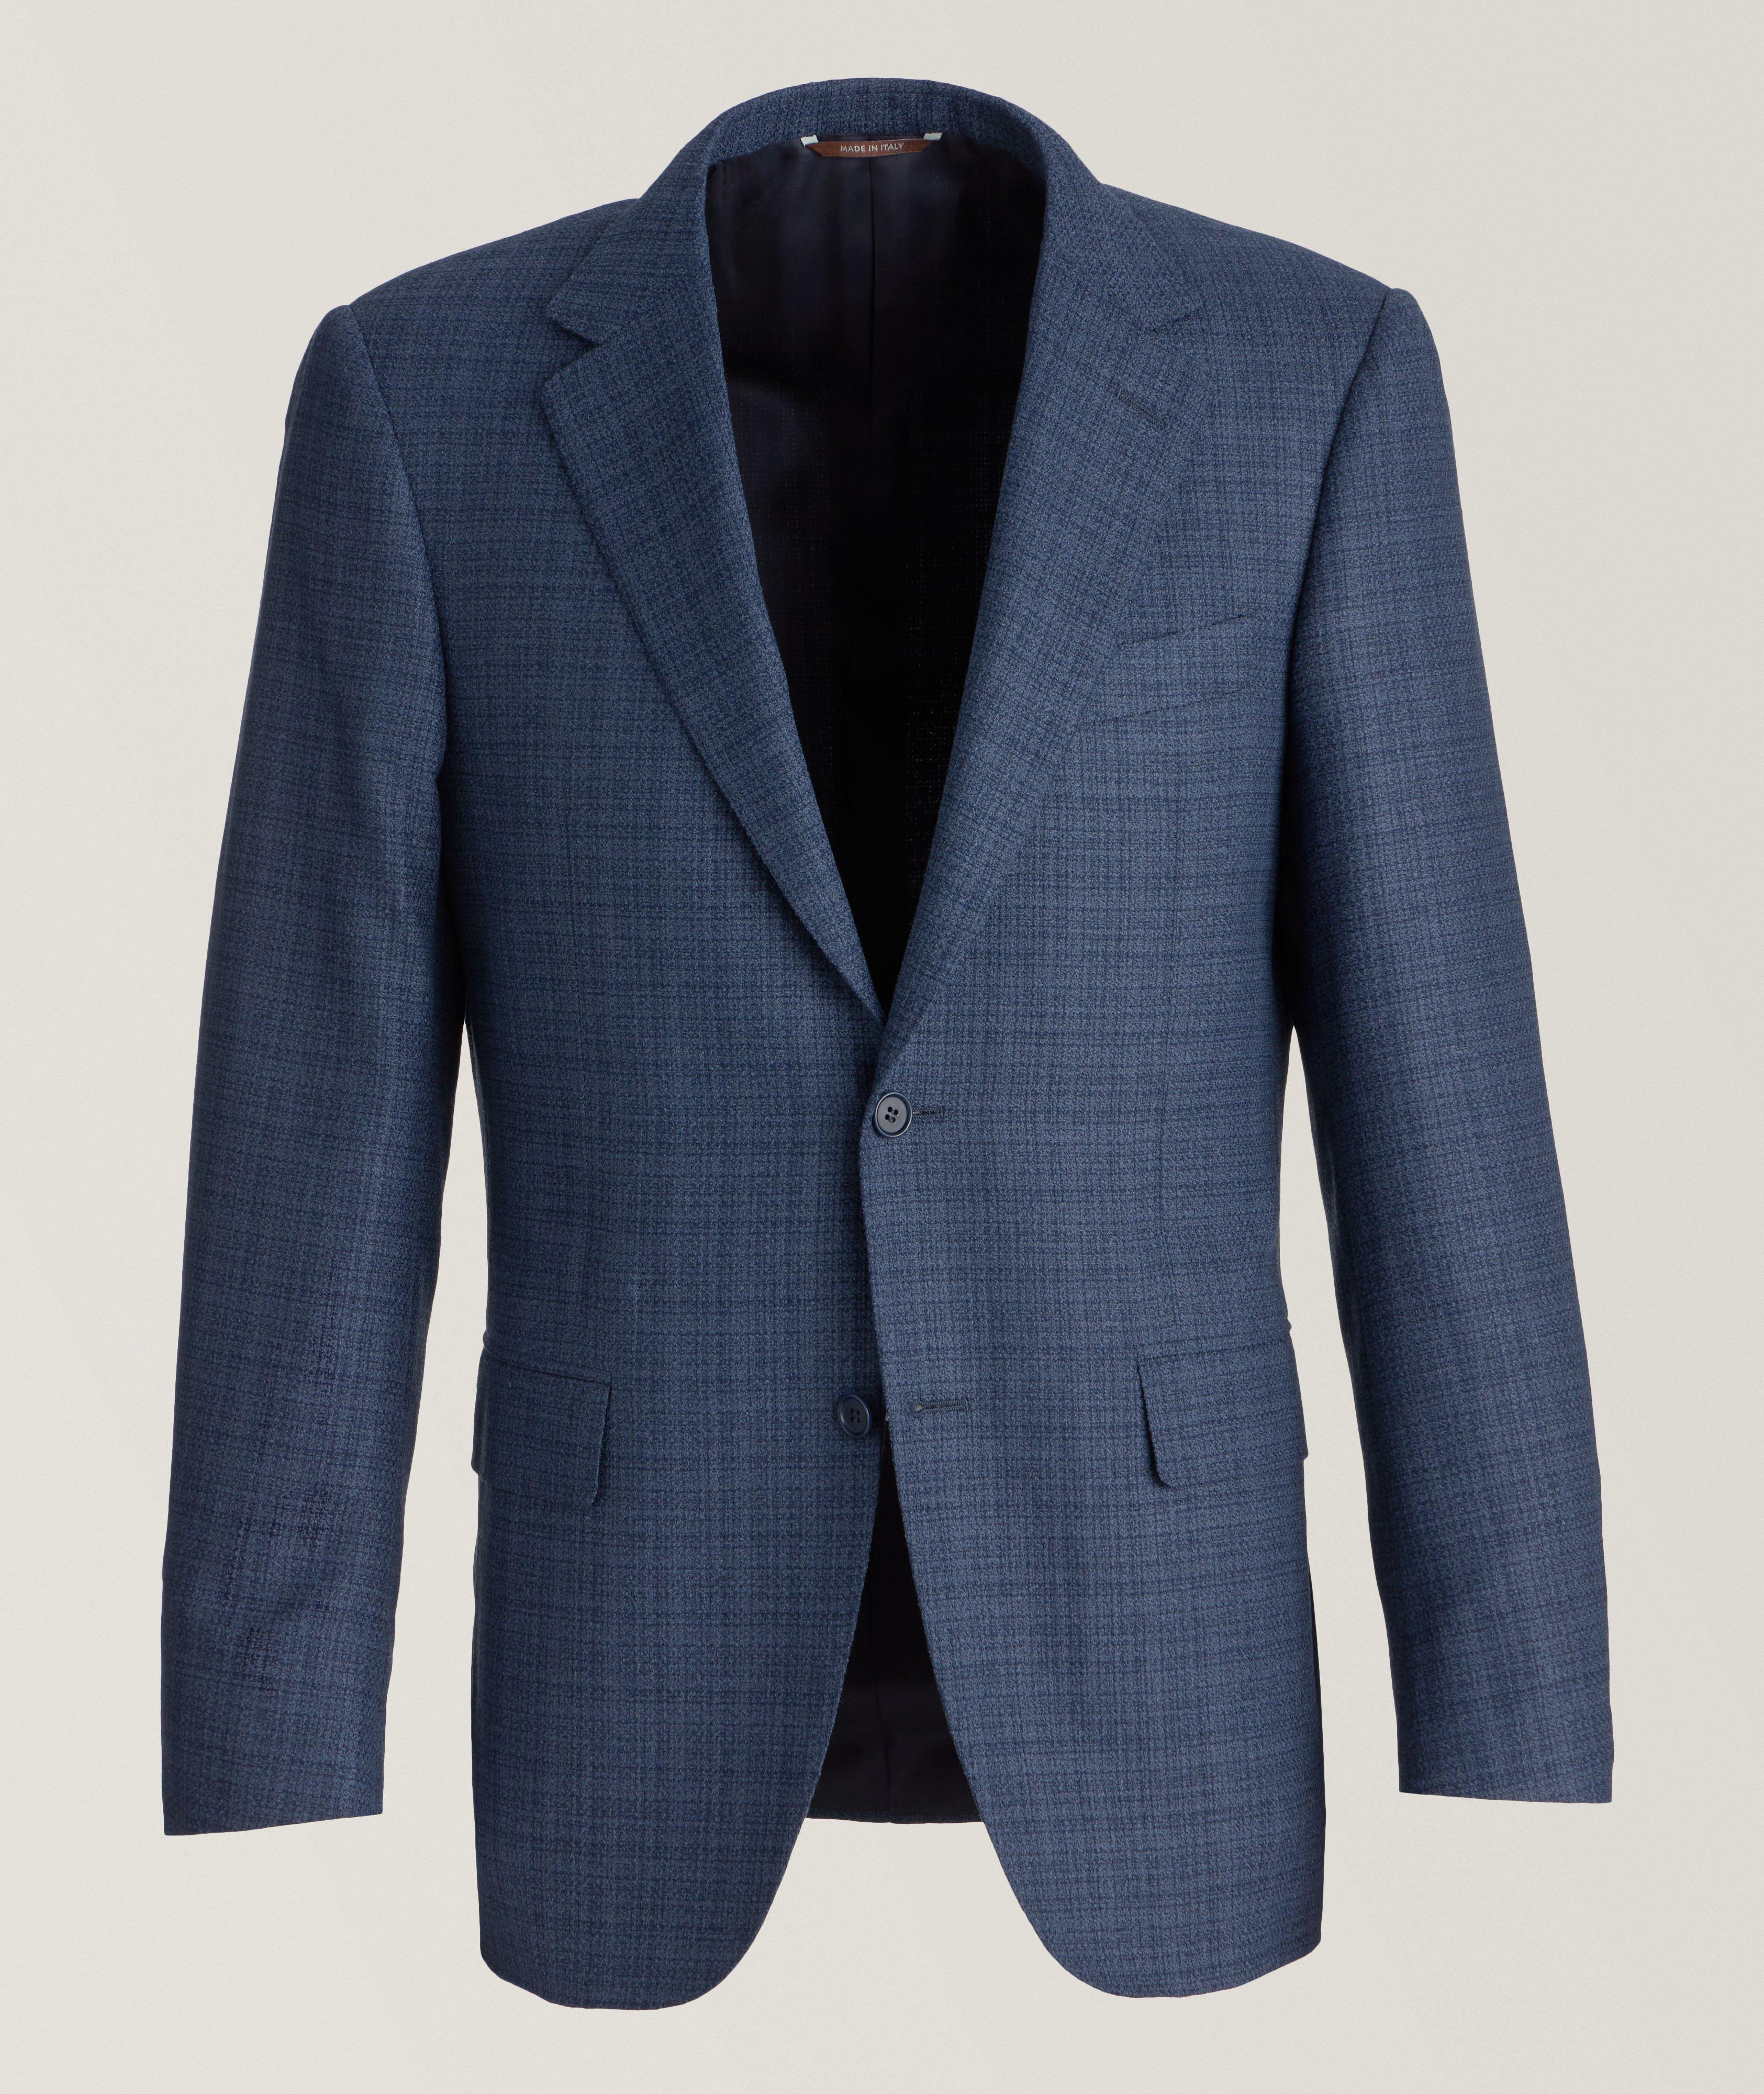 Textured Check Wool-Blend Sport Jacket image 0